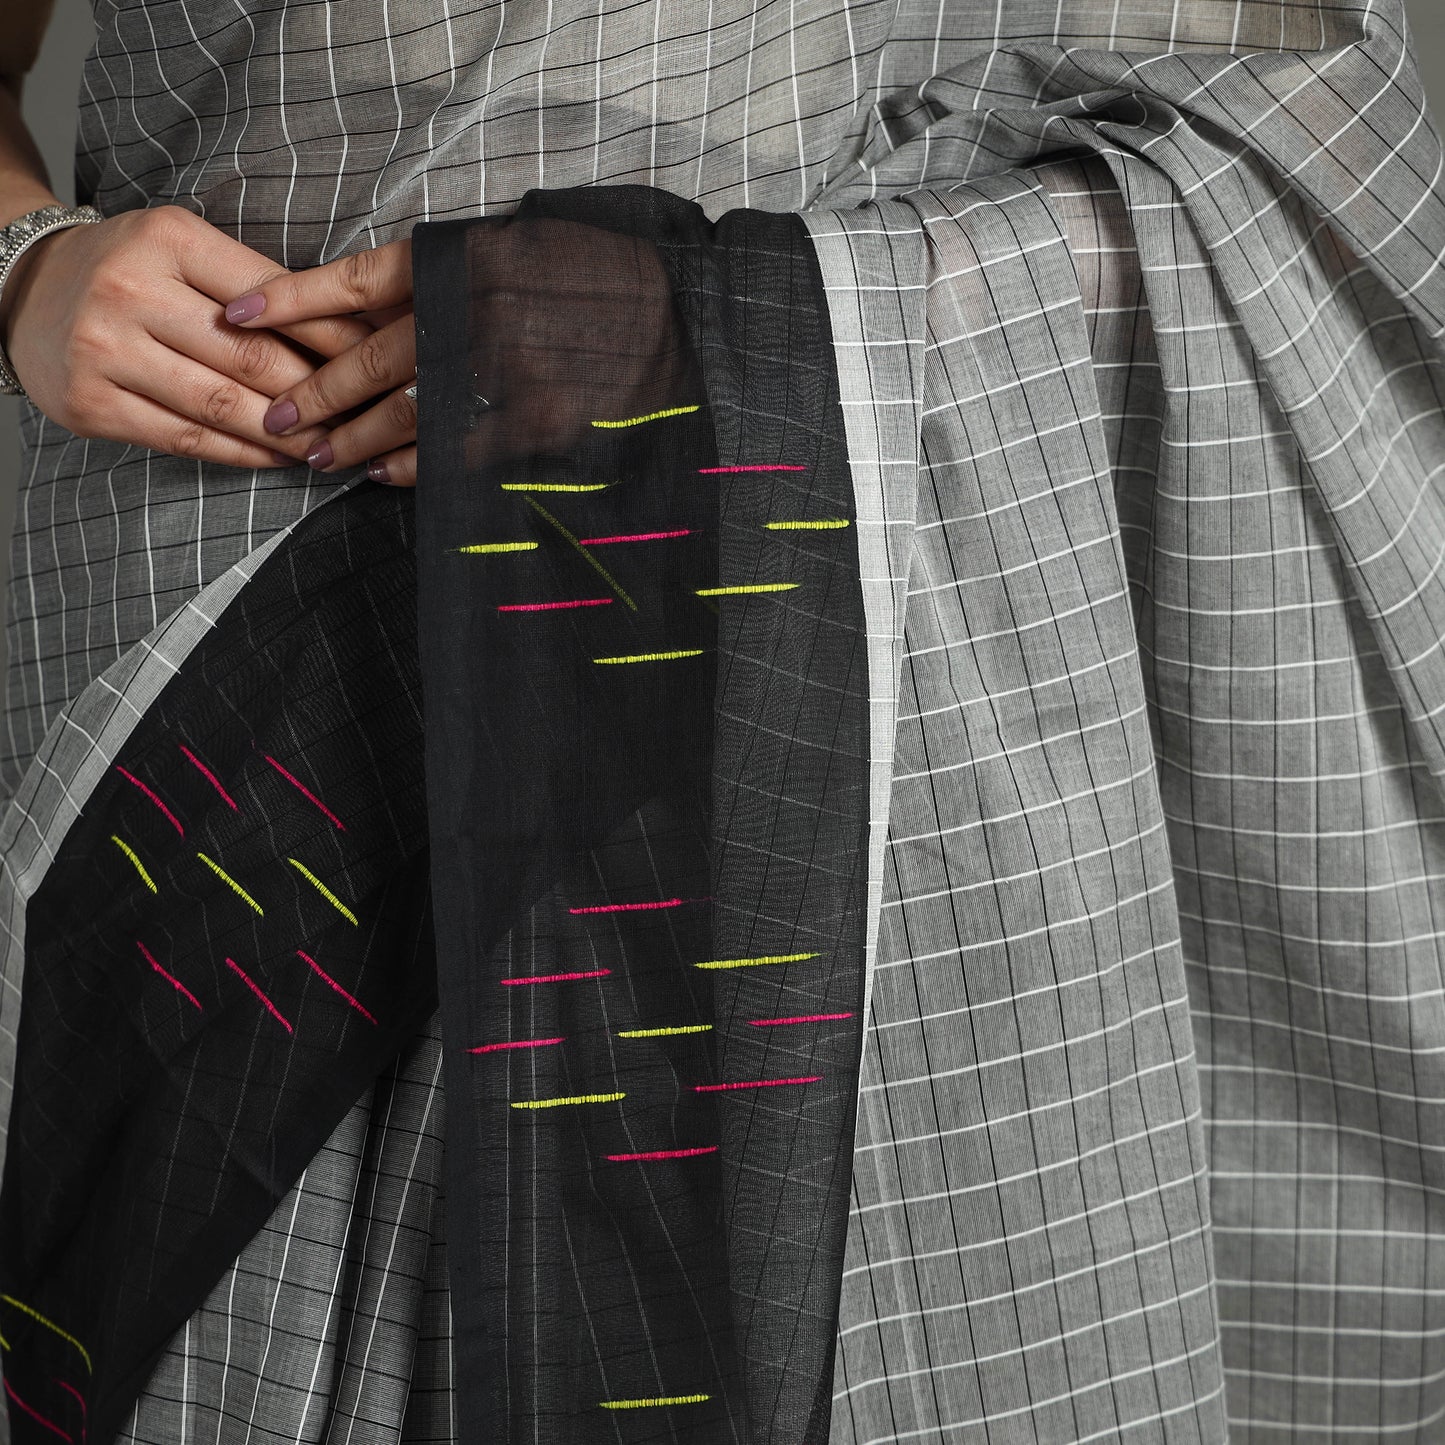 Grey - Traditional Venkatagiri Handloom Cotton Checks Saree 08